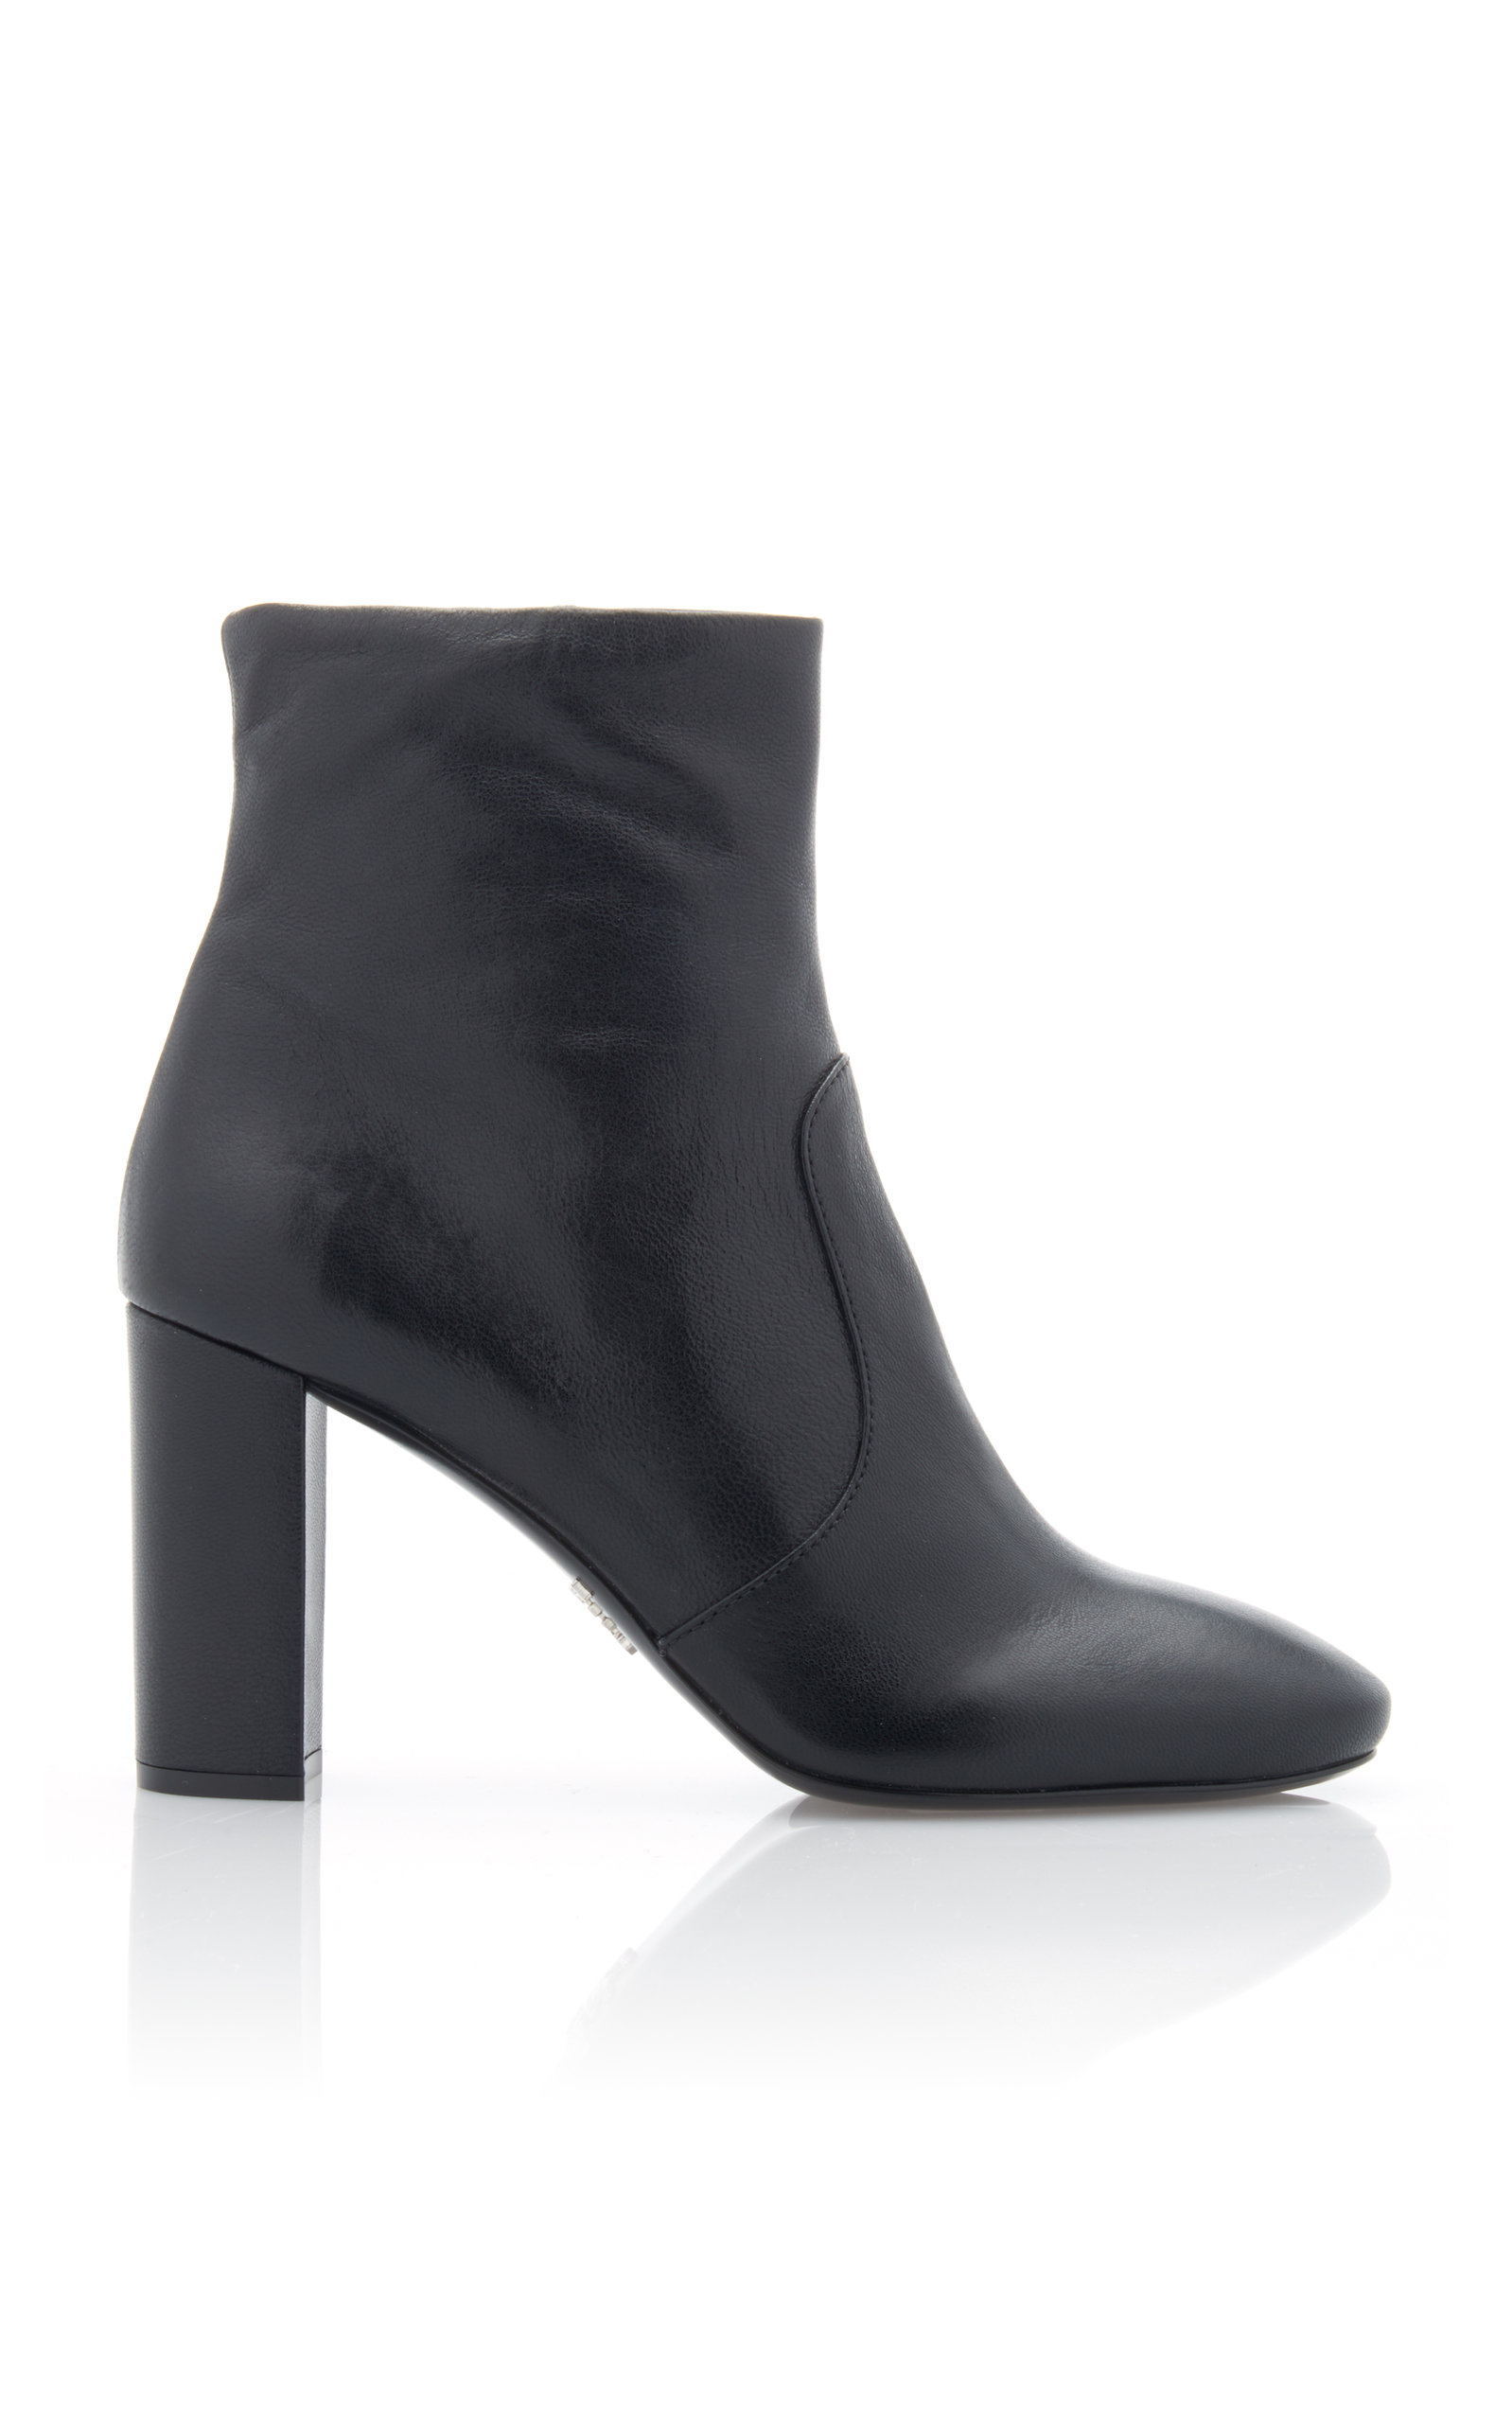 Prada - Women's Leather Ankle Boots - Black - Moda Operandi